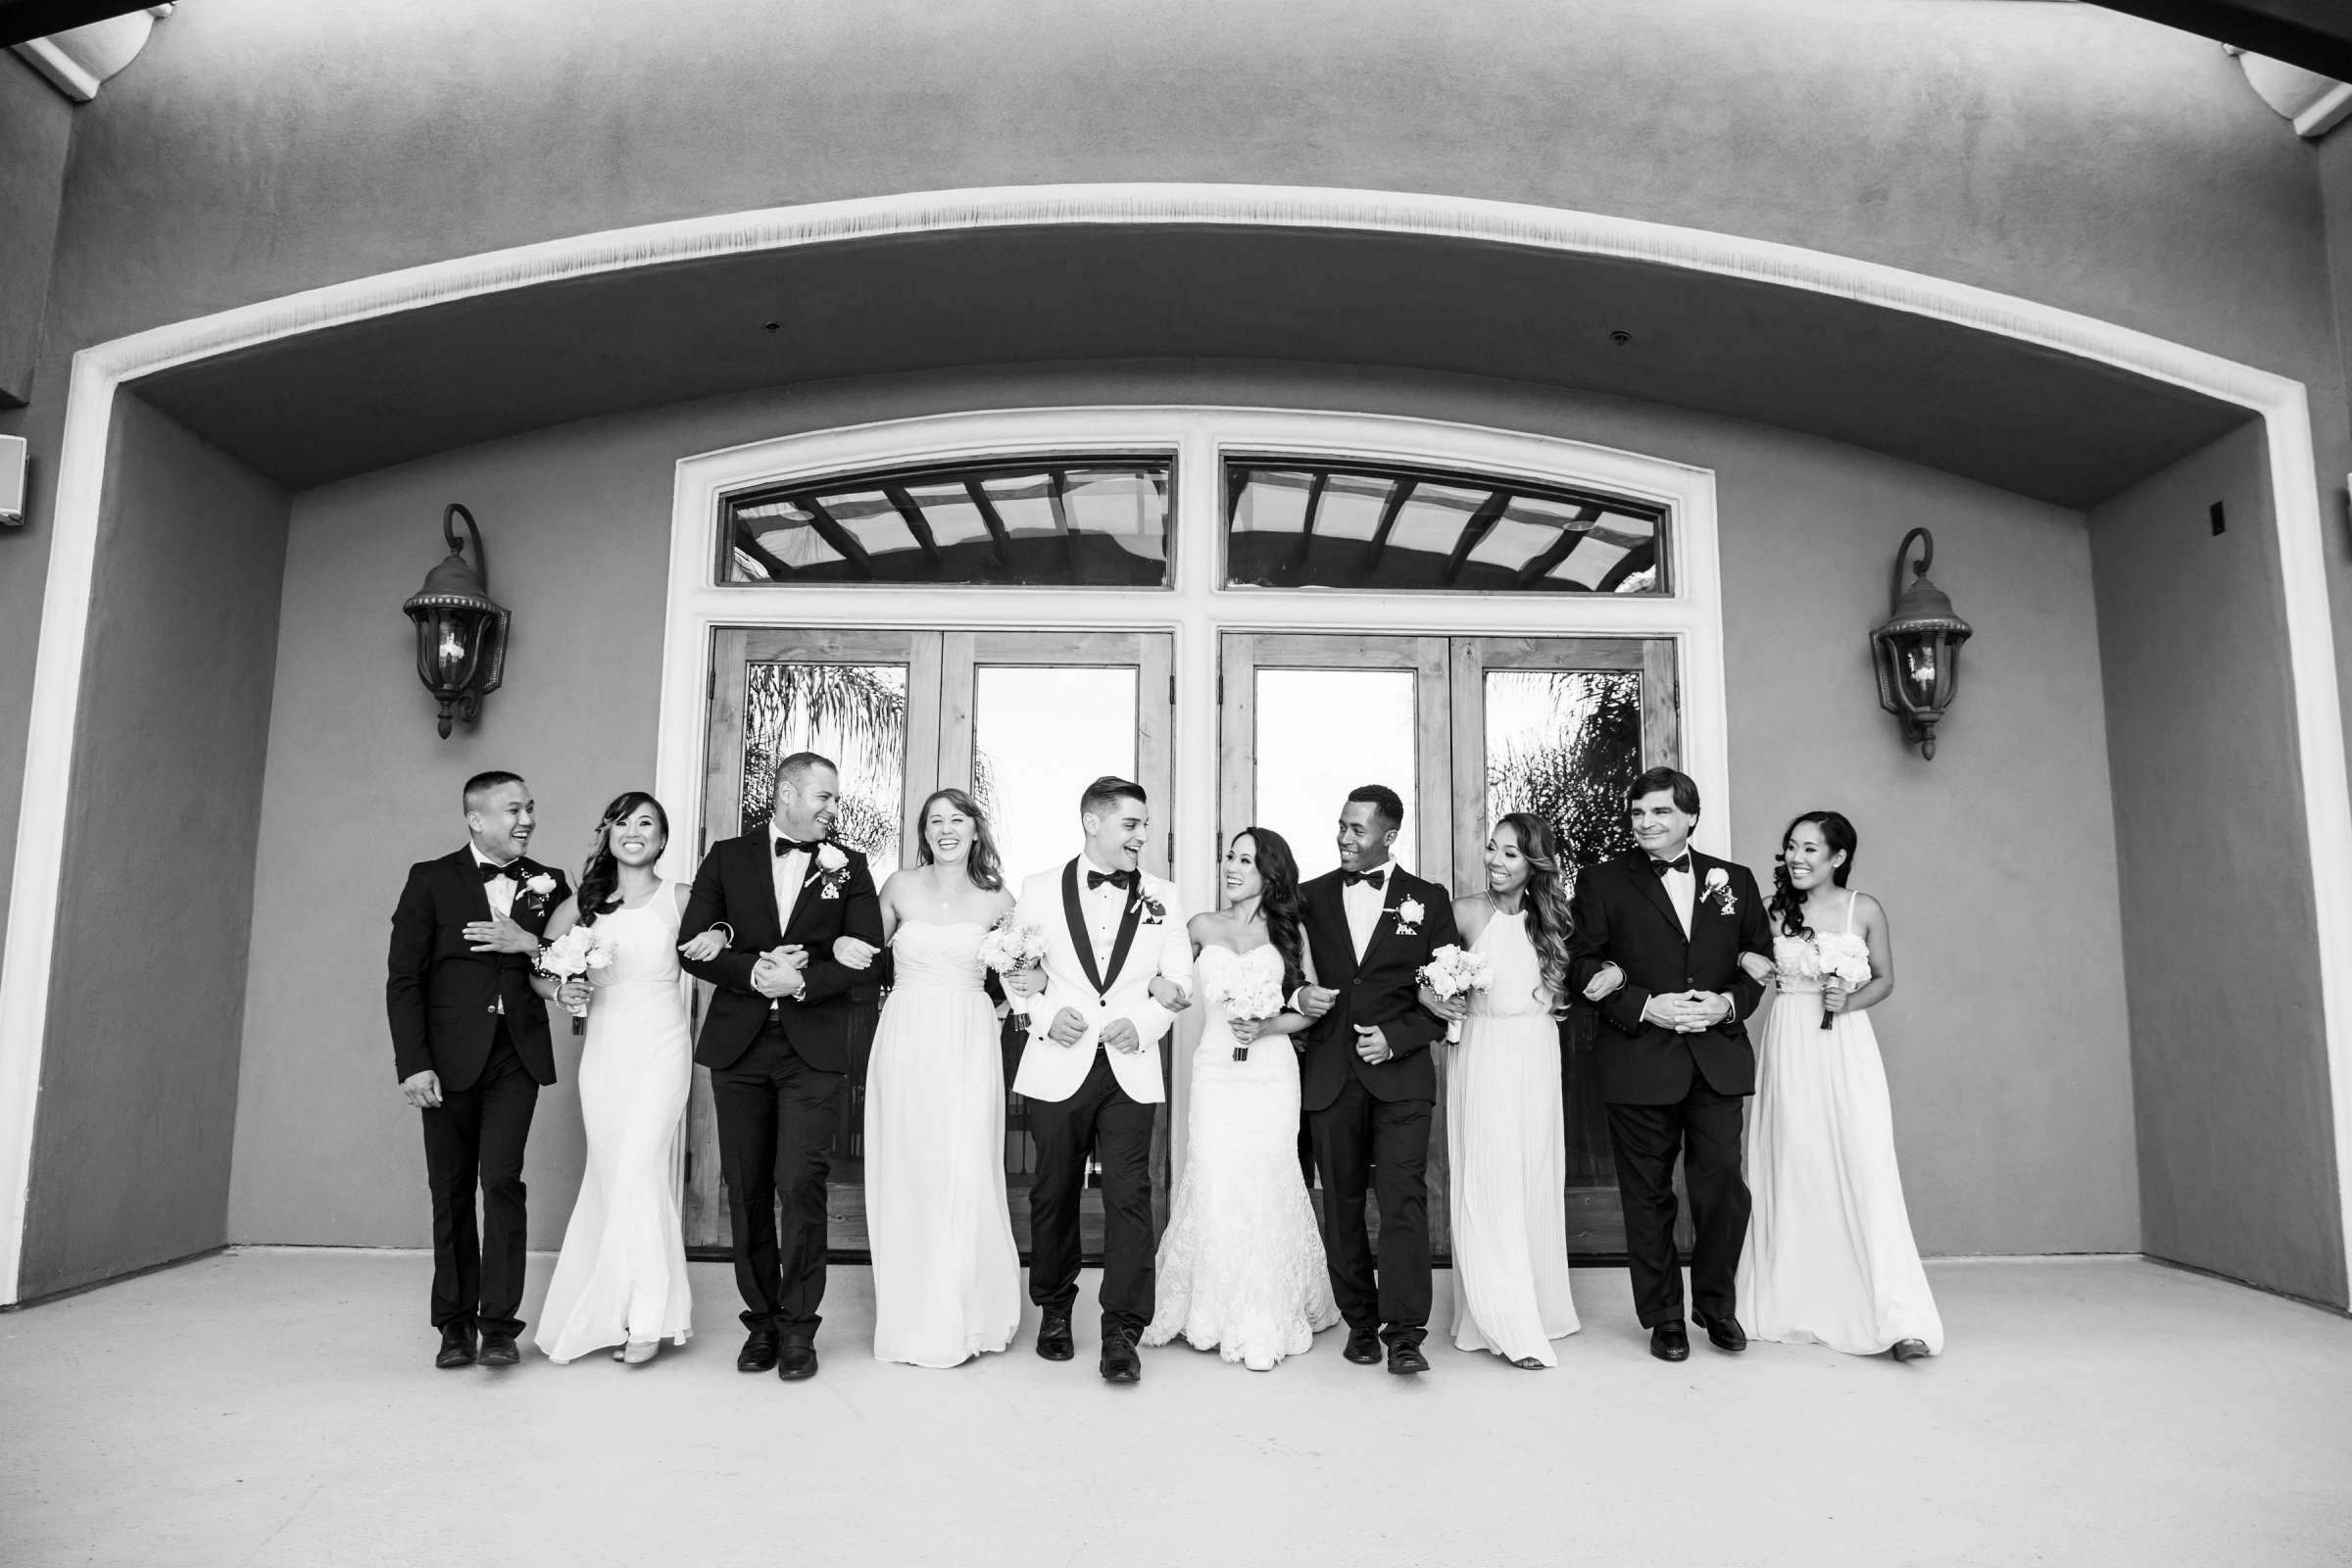 Wilson Creek Winery Wedding, Quynhnhi and Jacob Wedding Photo #10 by True Photography